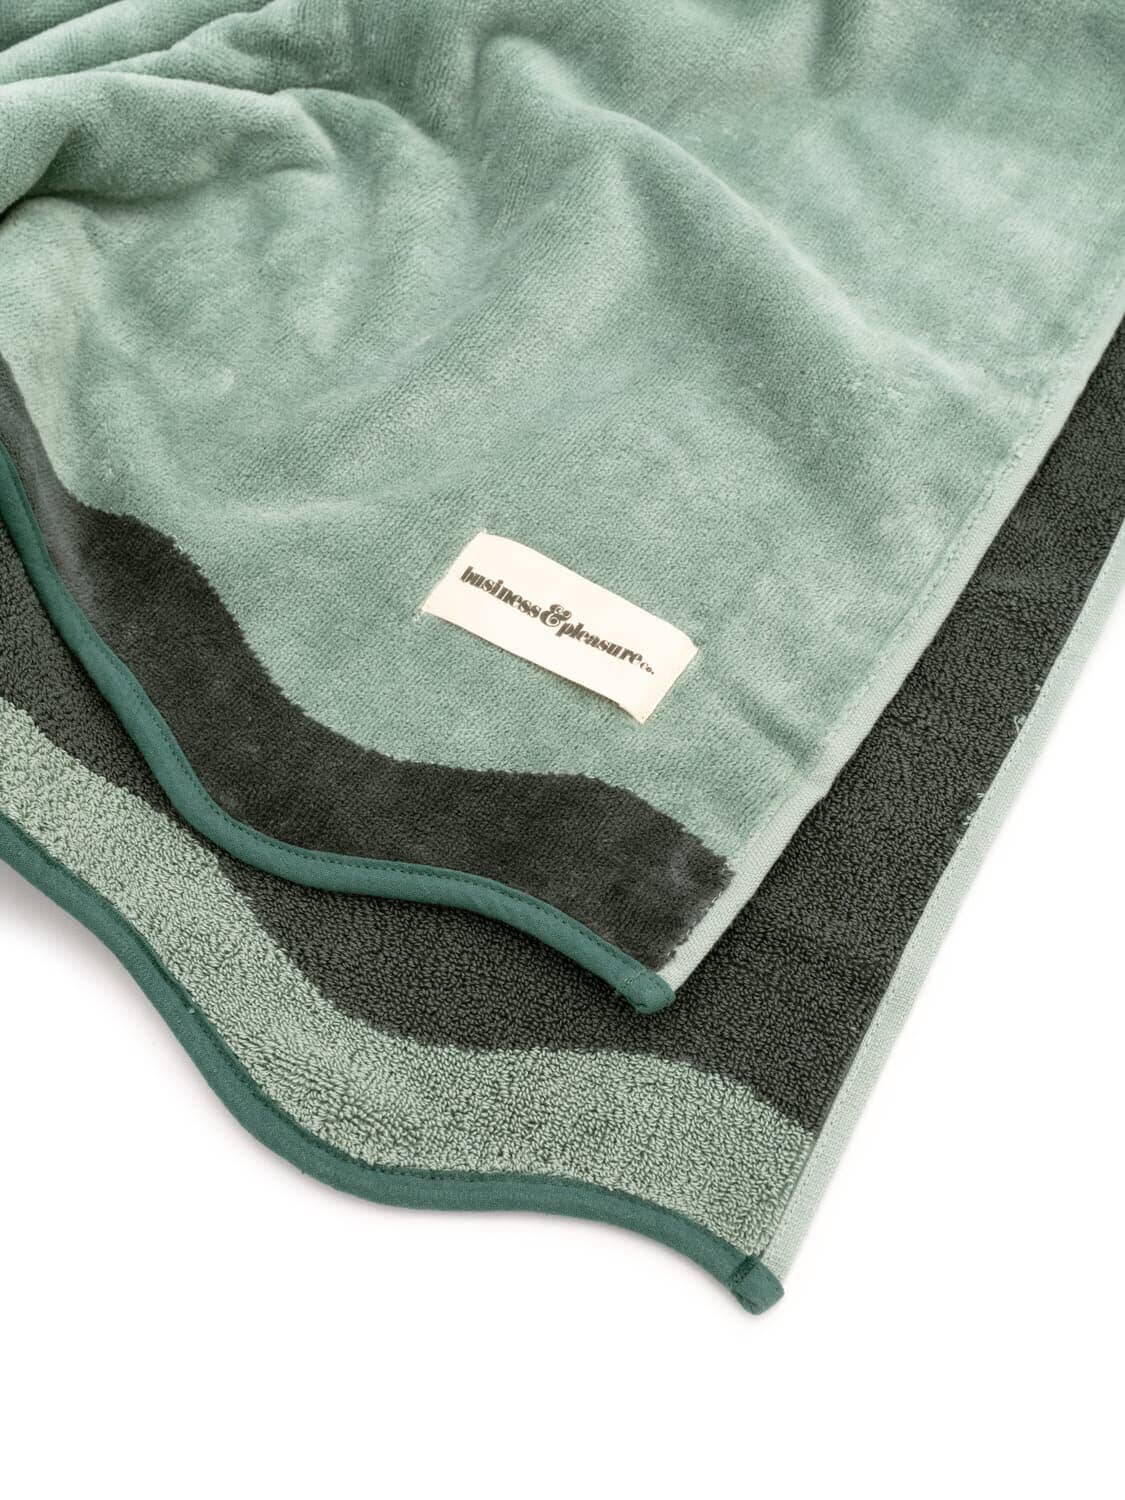 Studio image of Riviera Green Beach towel